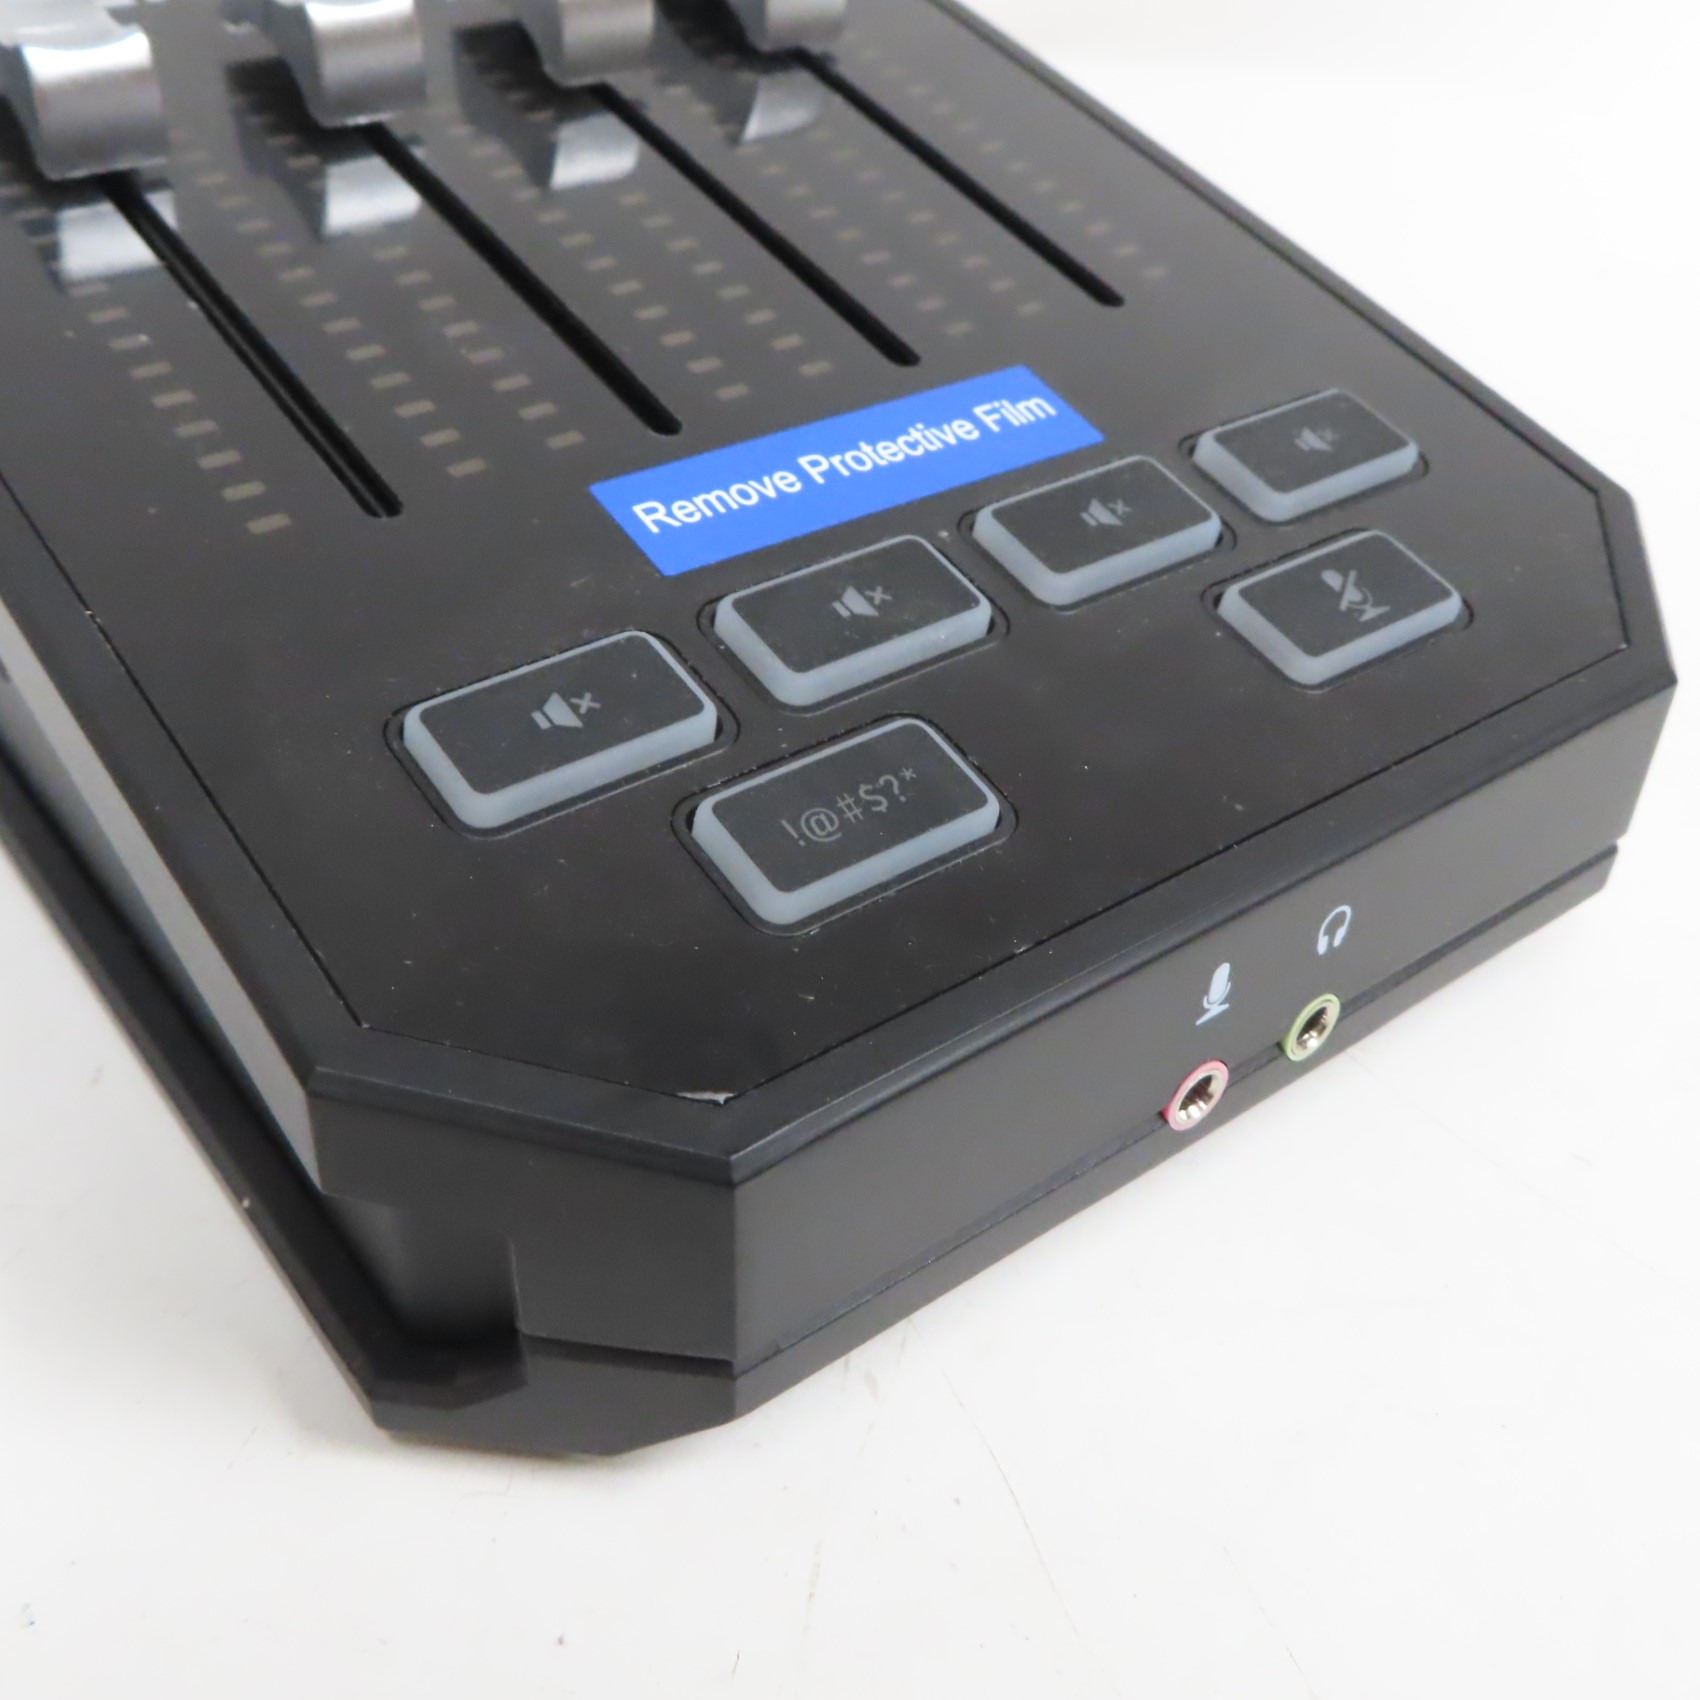 TC-Helicon GoXLR Mini USB Streaming Mixer with USB/Audio Interface